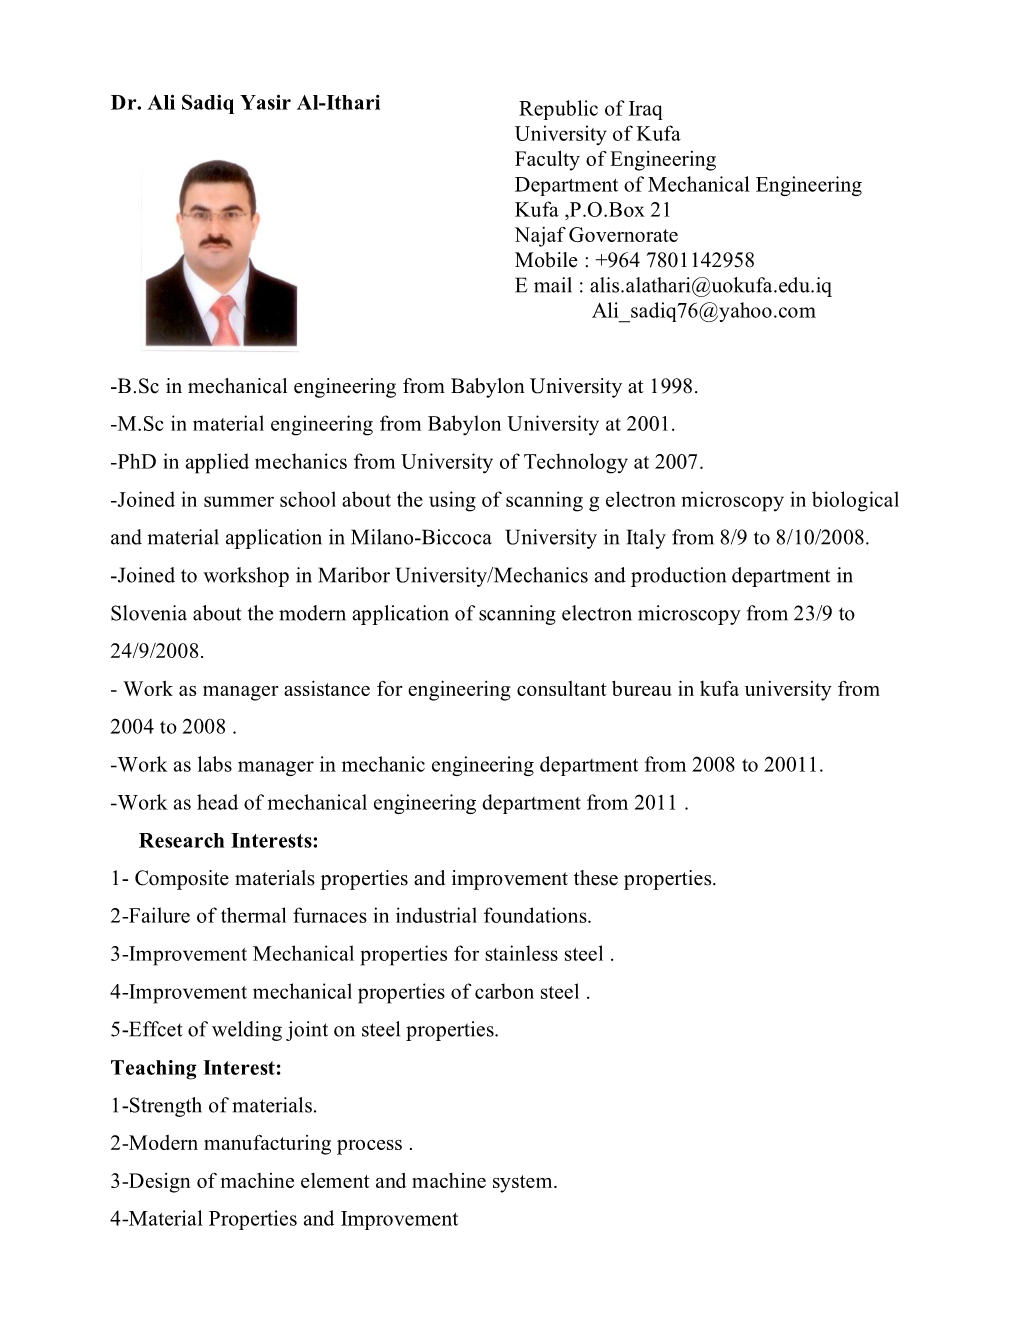 Dr. Ali Sadiq Yasir Al-Ithari -B.Sc in Mechanical Engineering From